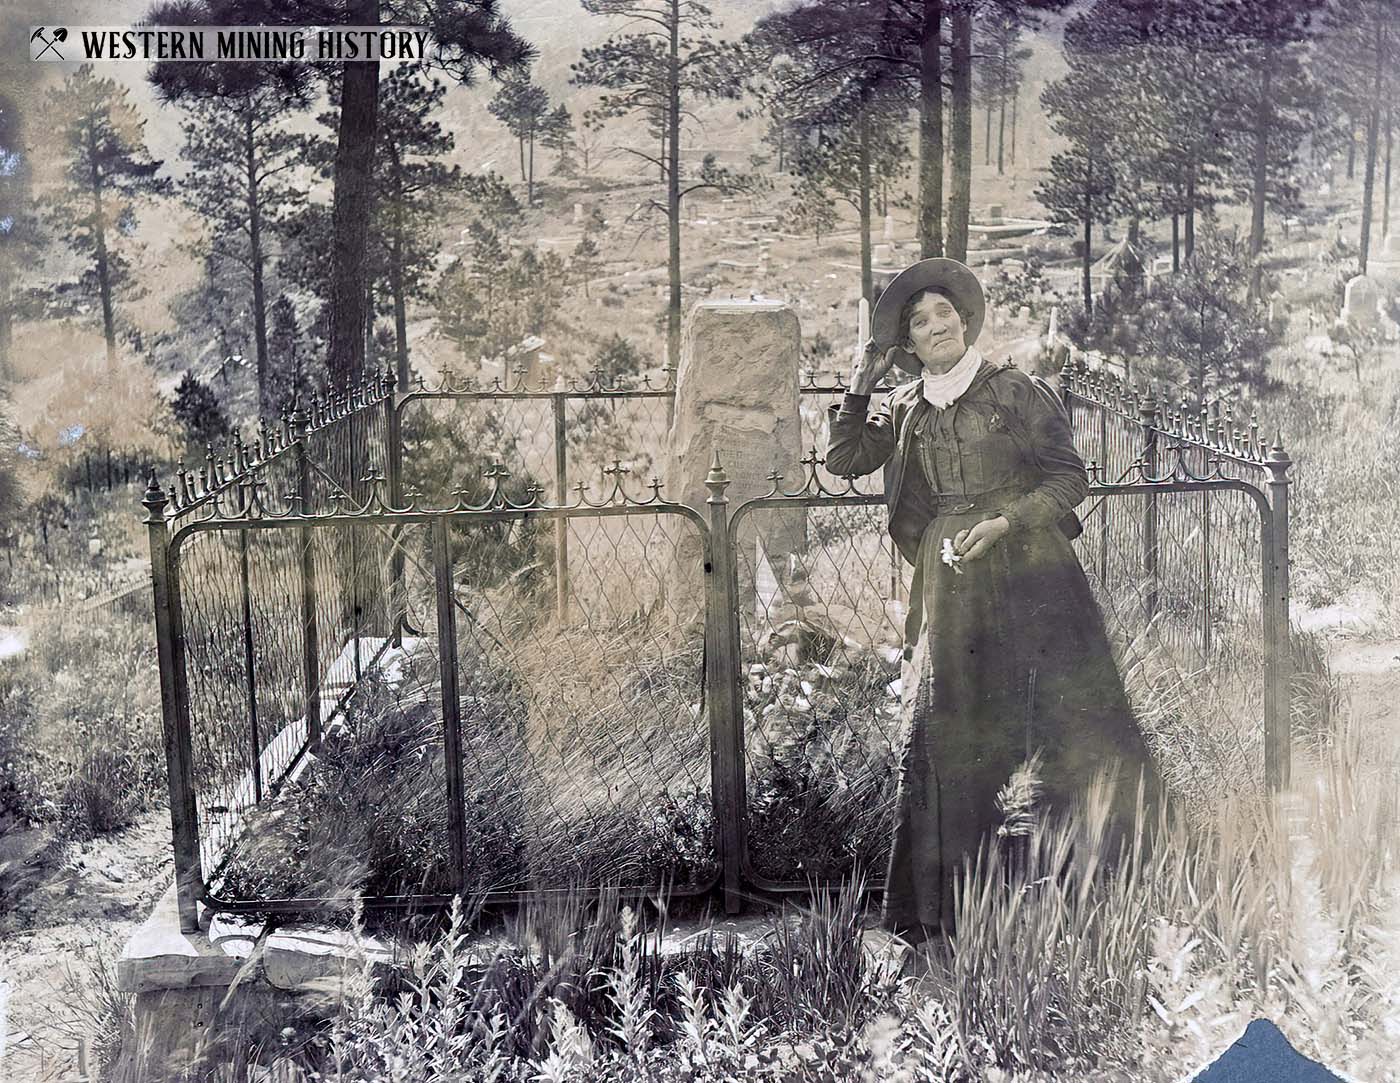 Calamity Jane at Wild Bill's grave ca. 1903